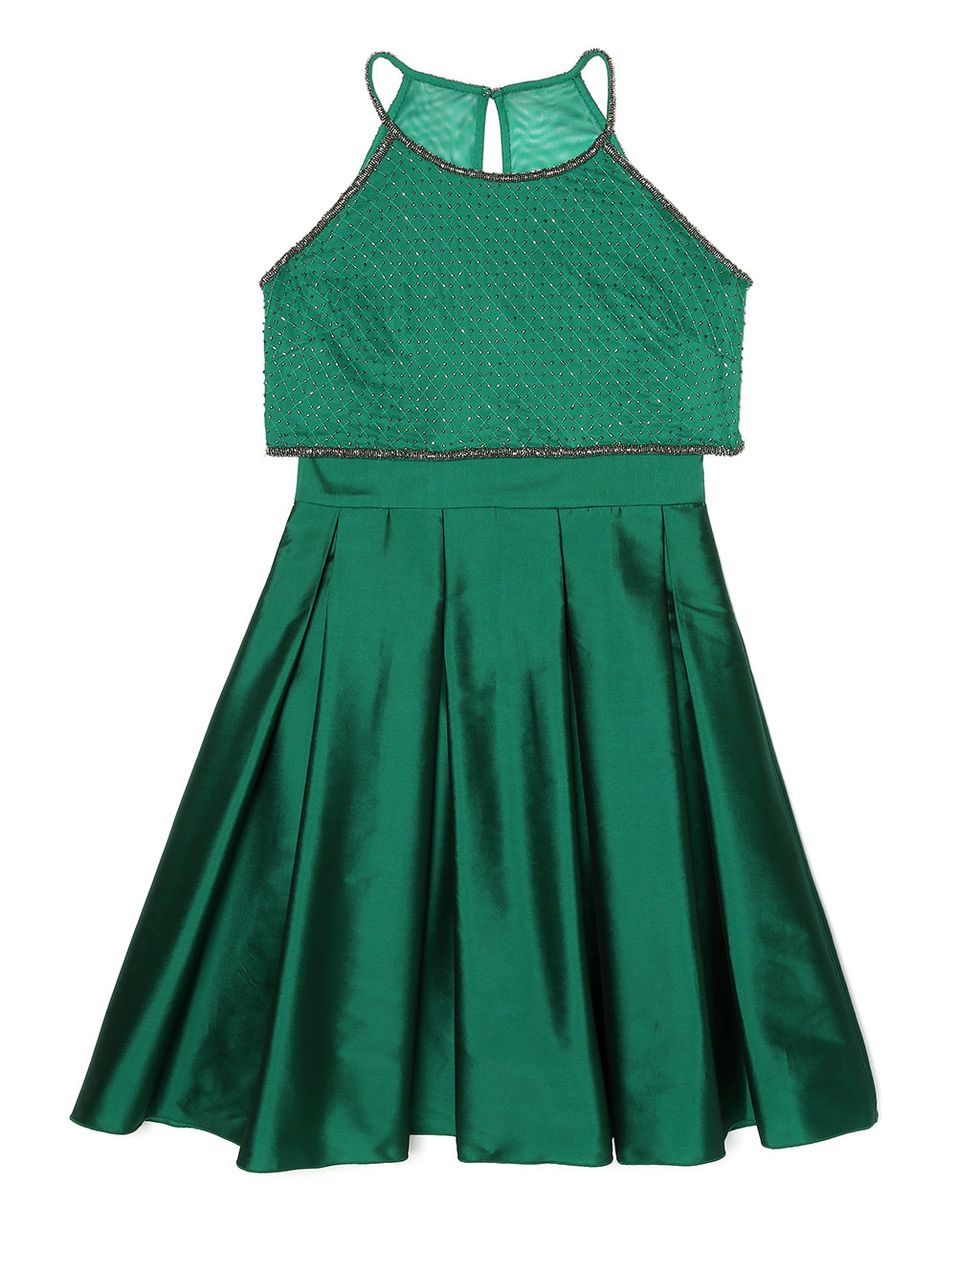 Clothing, Green, Day dress, Dress, Cocktail dress, A-line, One-piece garment, Sleeve, Pattern, 